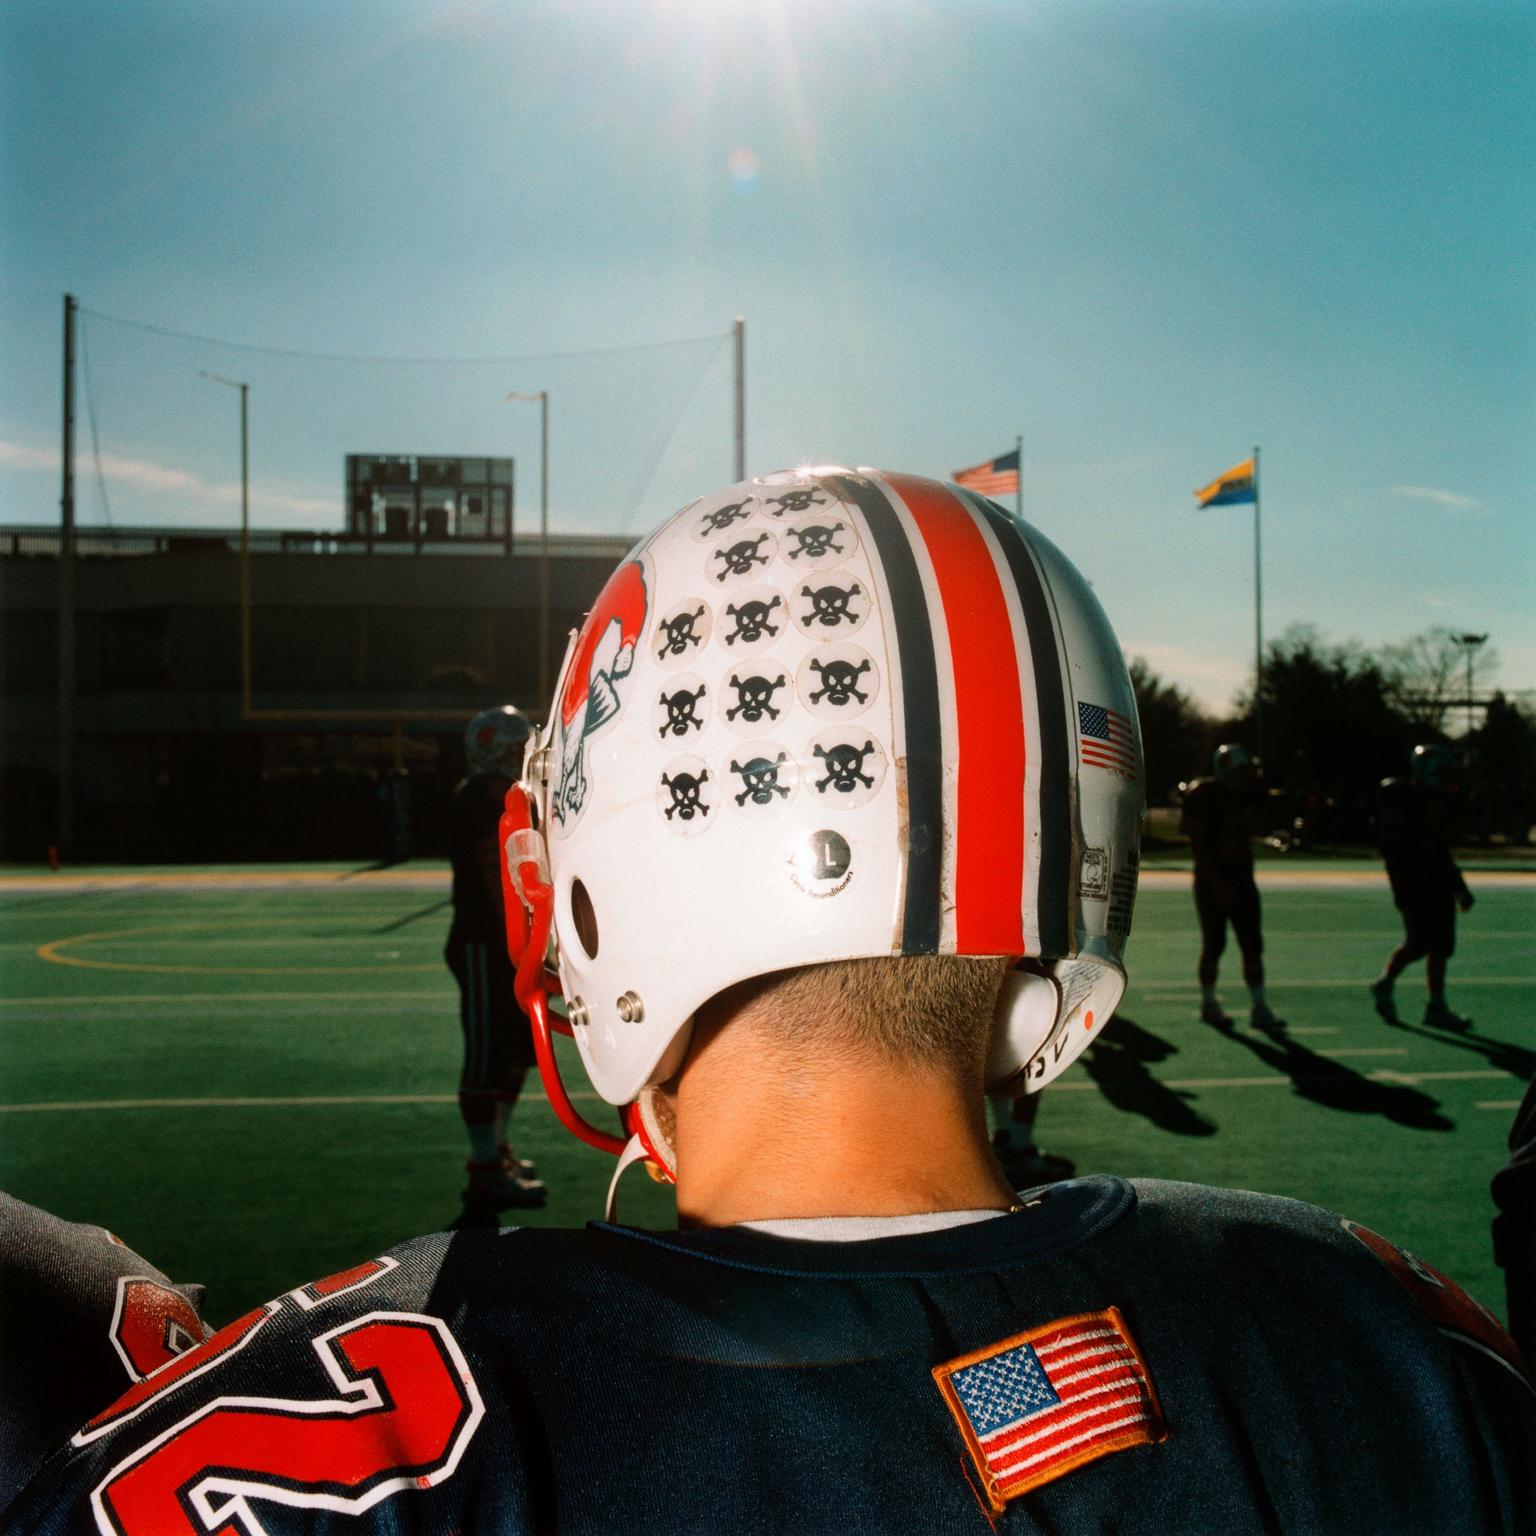 Brian Finke Color Photograph - Untitled (Football no. 78)